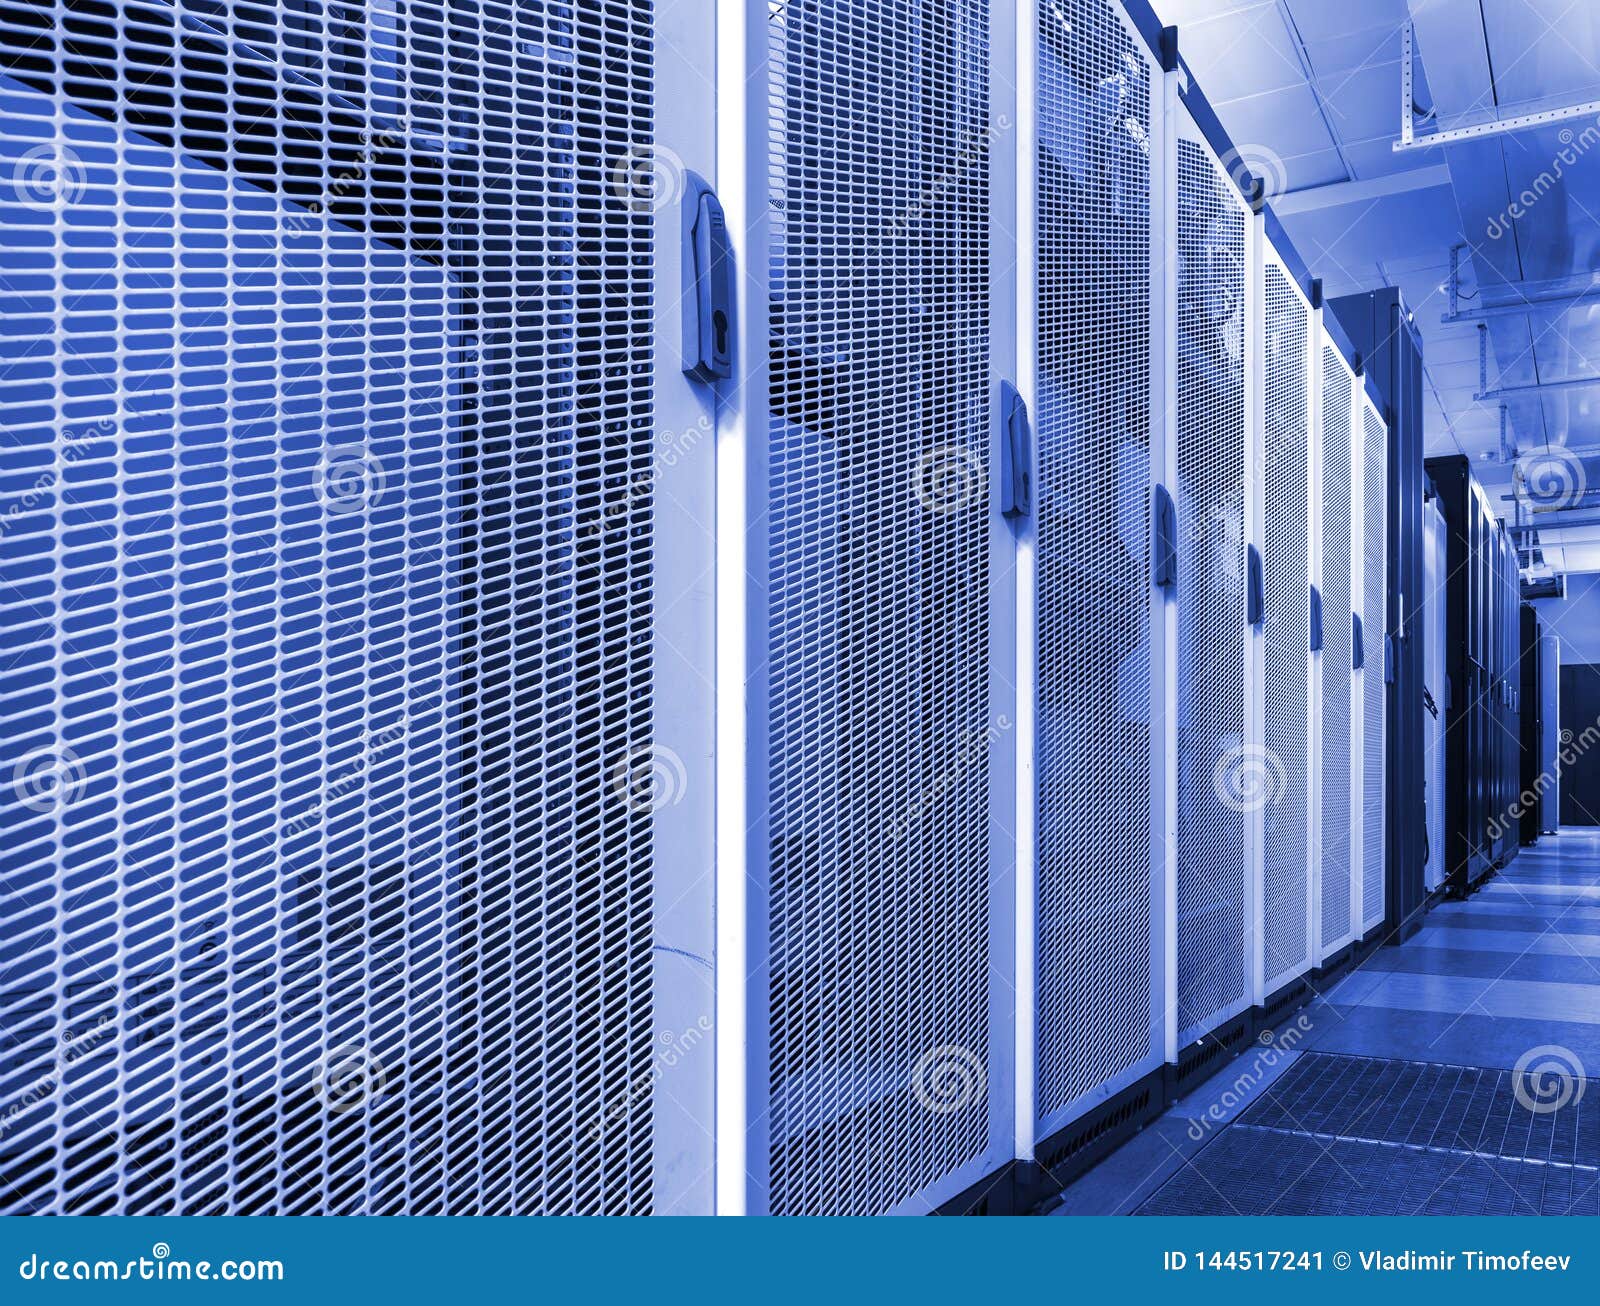 technical wall of cellular data terminal. row of telecom backhaul equipment in modern communication center